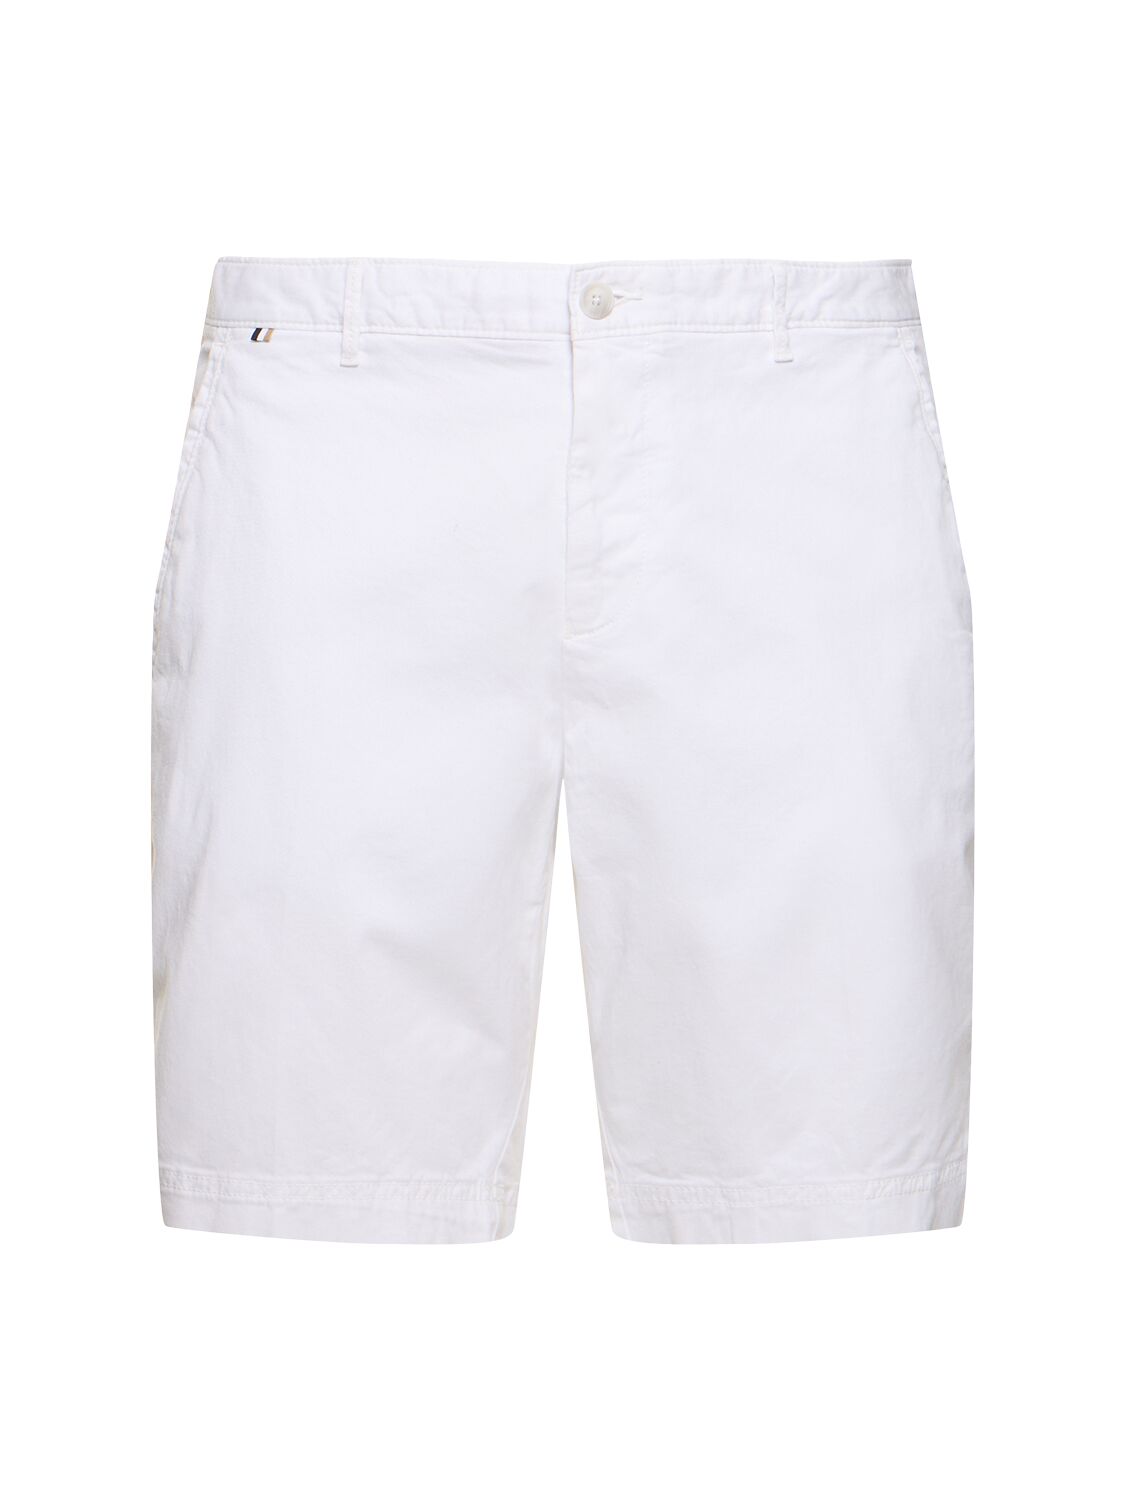 Image of Slice Stretch Cotton Shorts